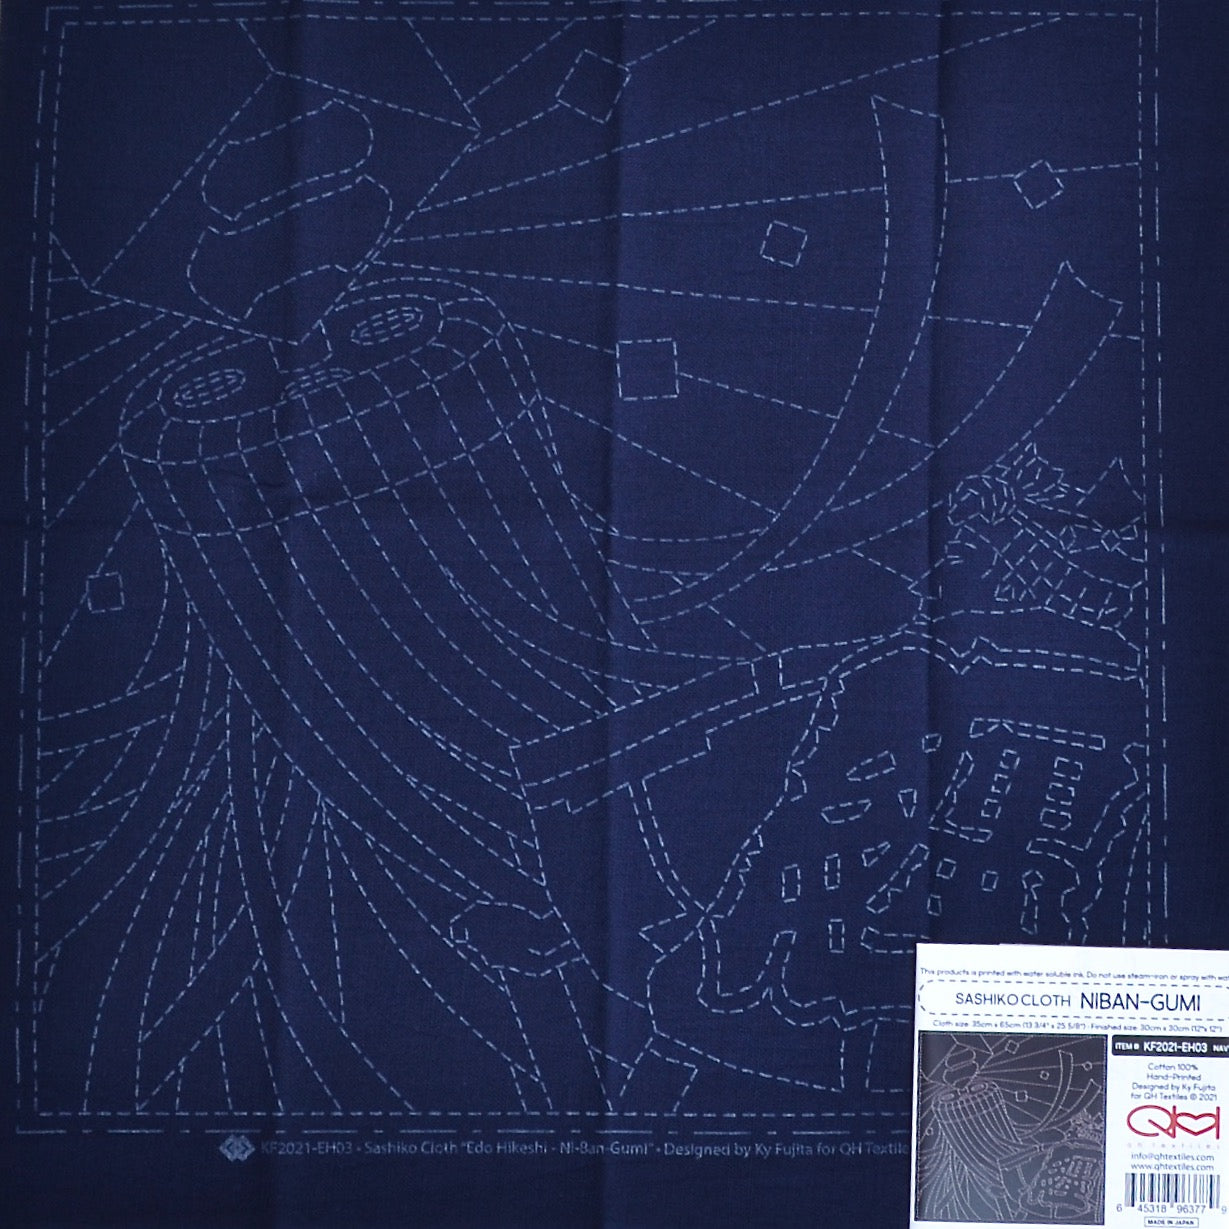 Sashiko cloth with ready to stitch design